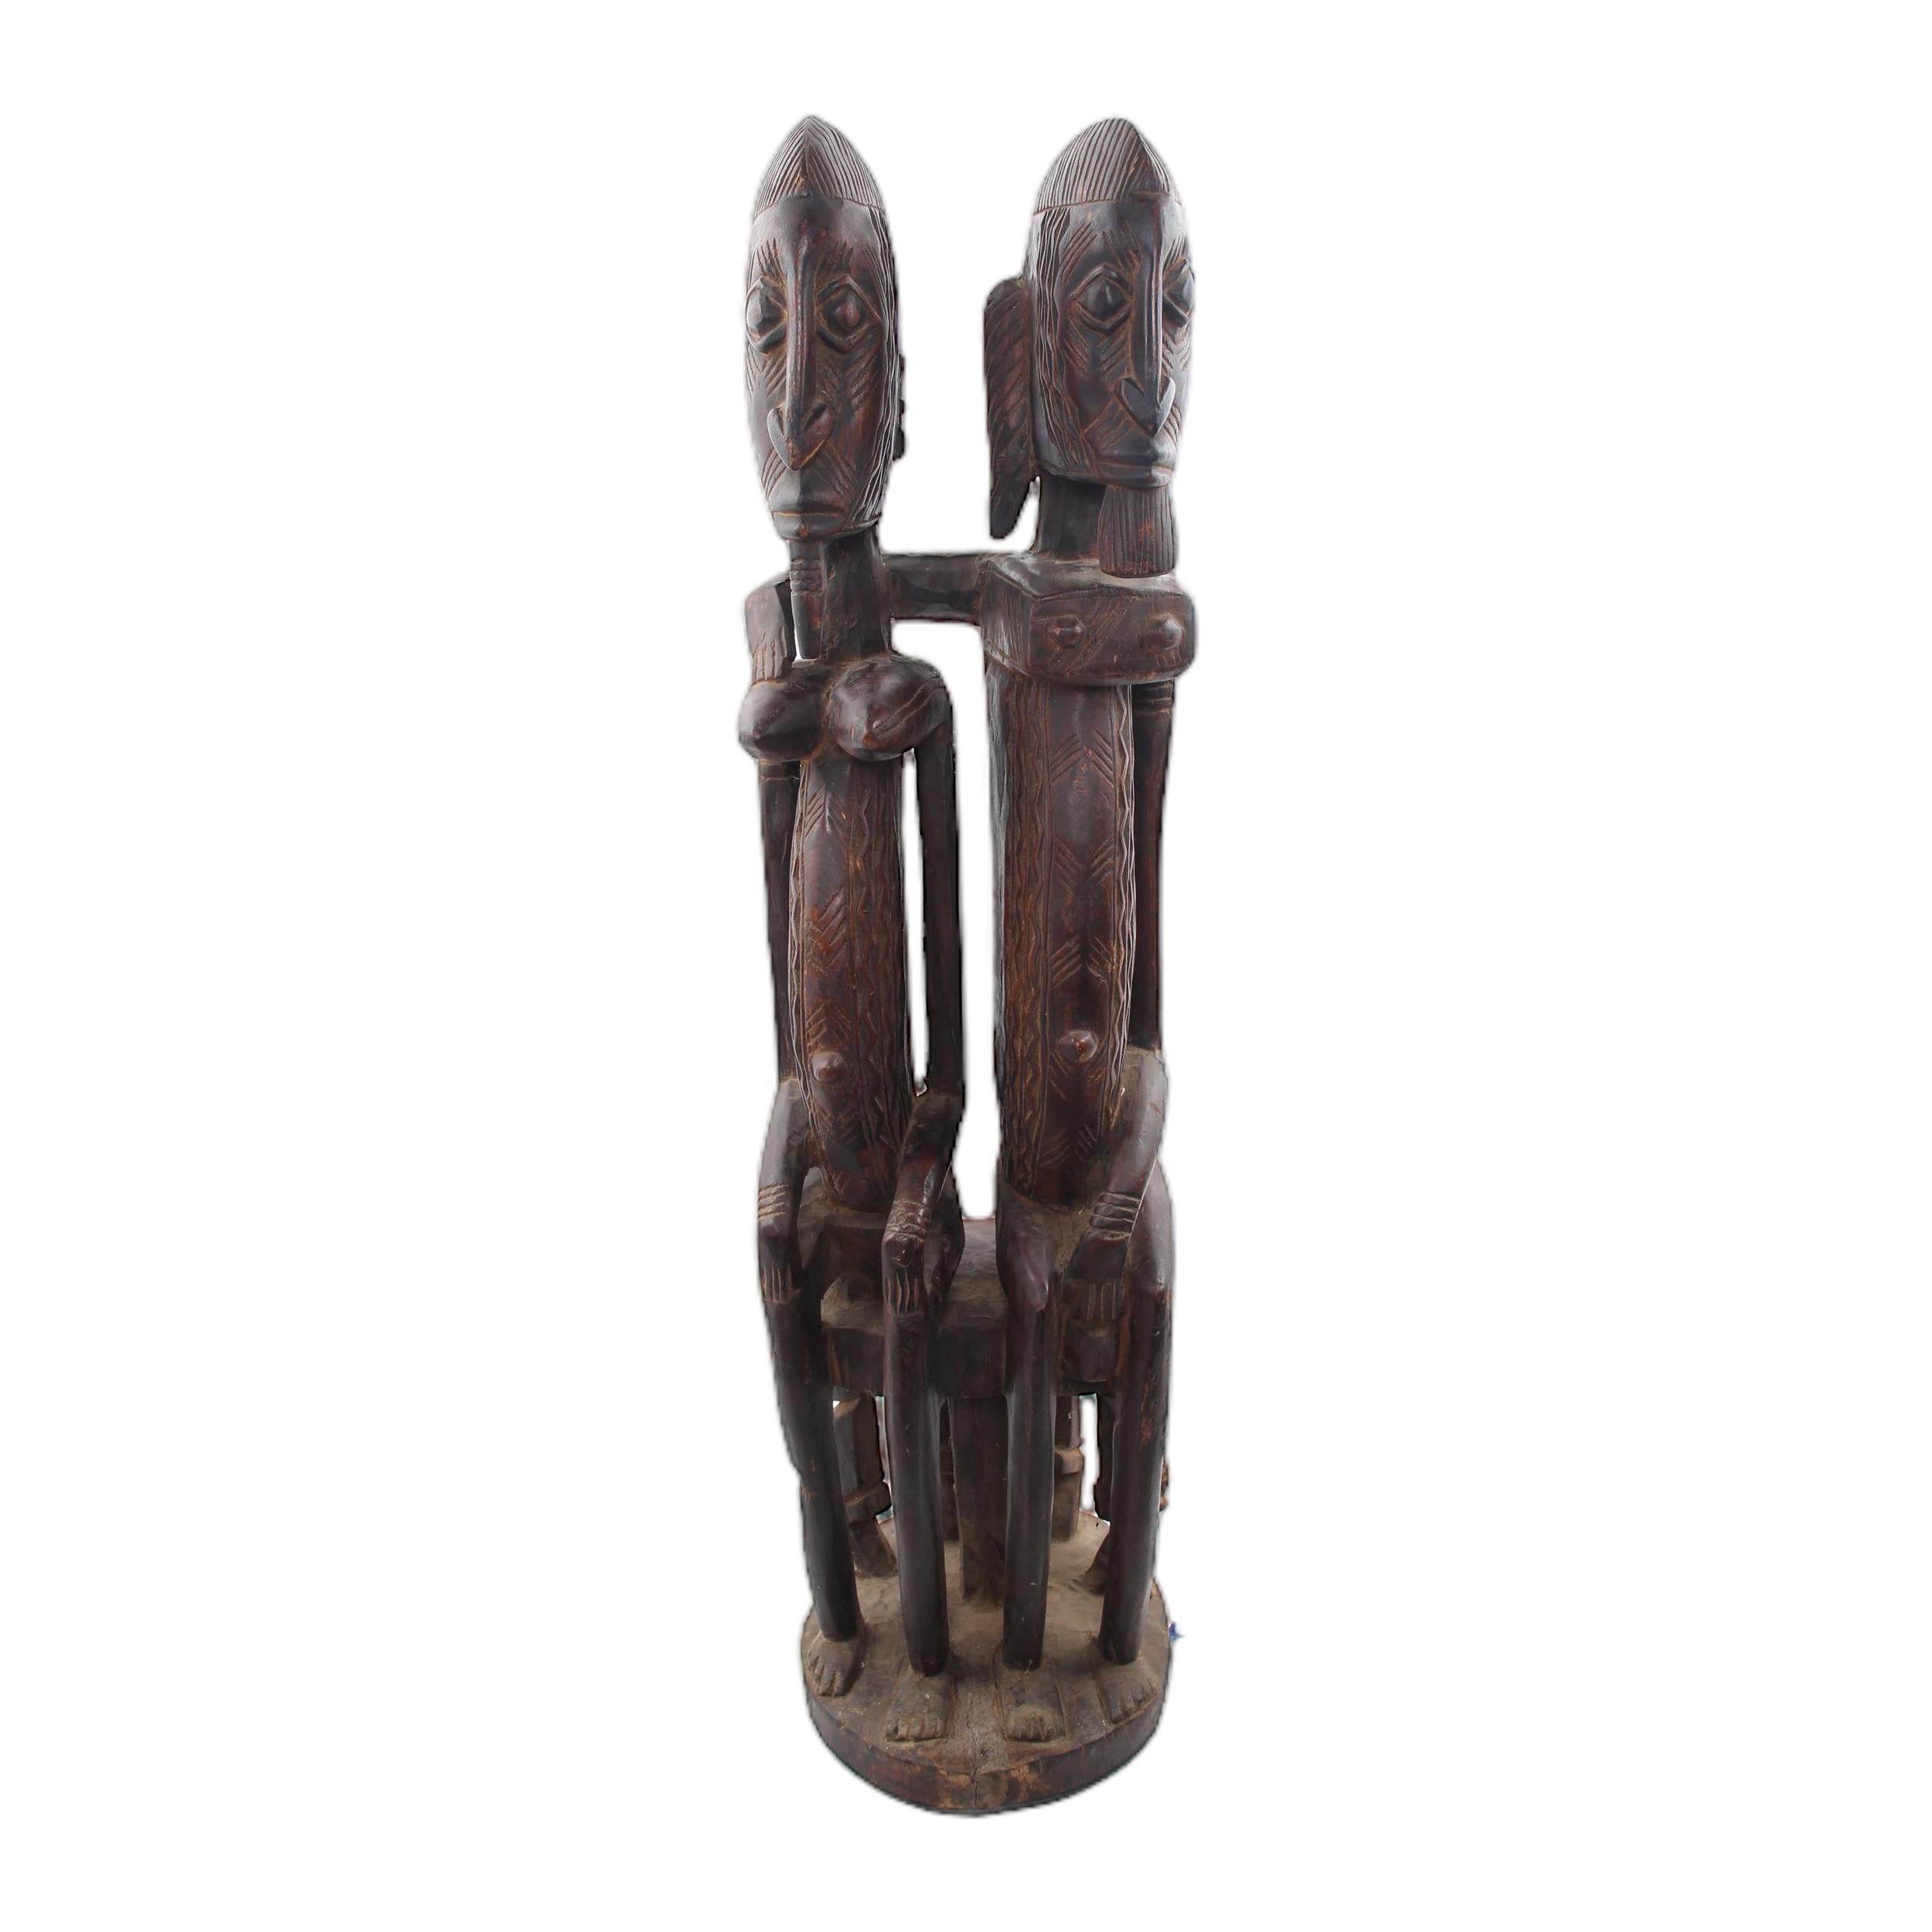 Dogon Tribe Figurine ~41.7" Tall - Figurine